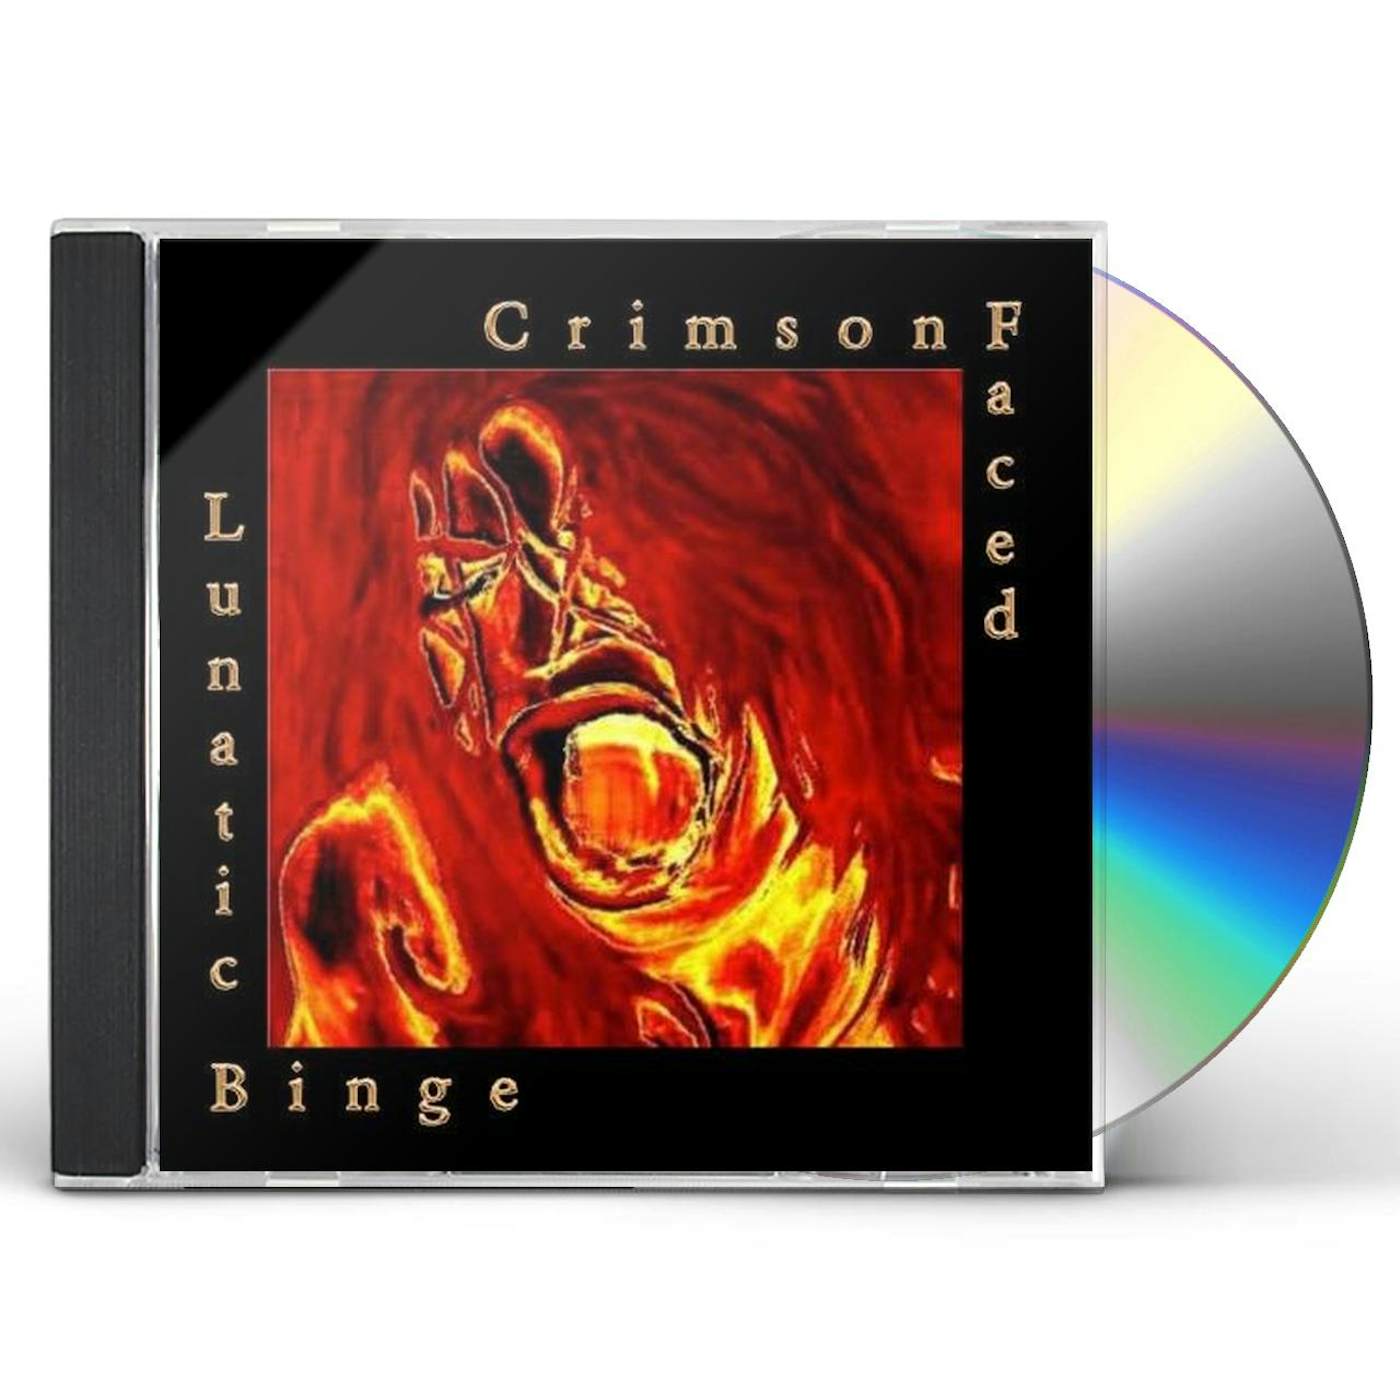 CrimsonFaced LUNATIC BINGE CD